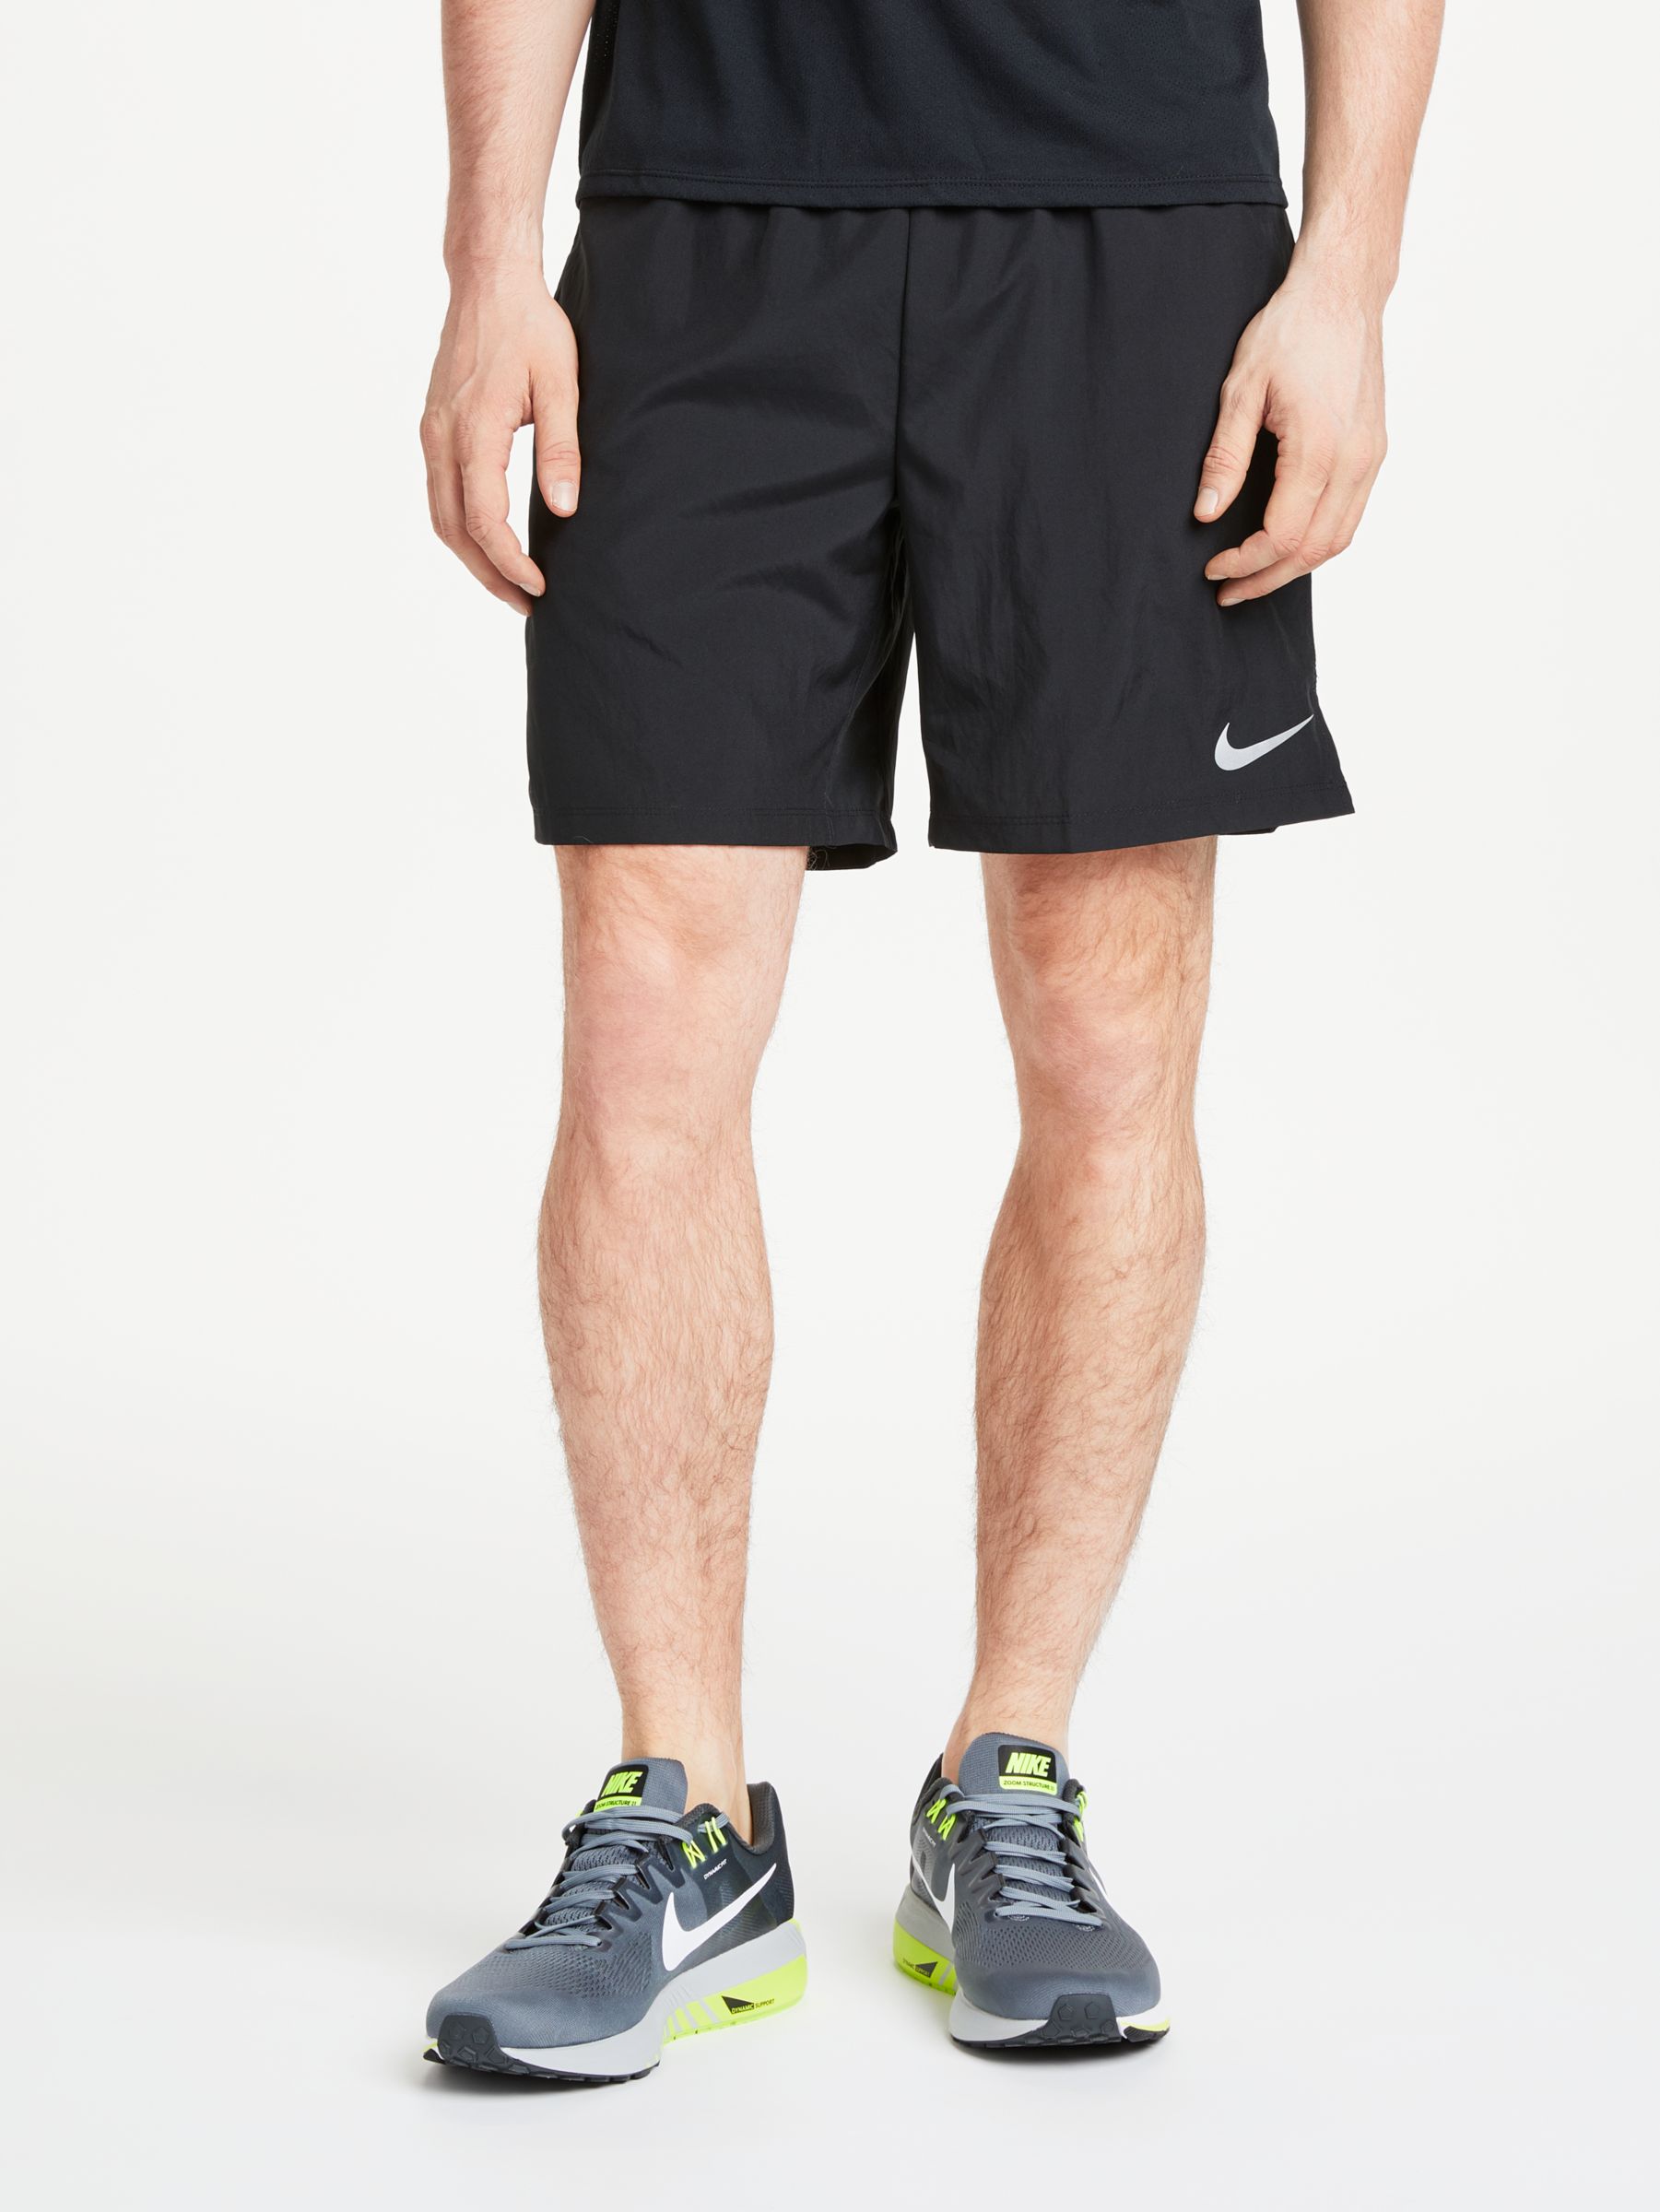 nike challenger 7 inch running shorts